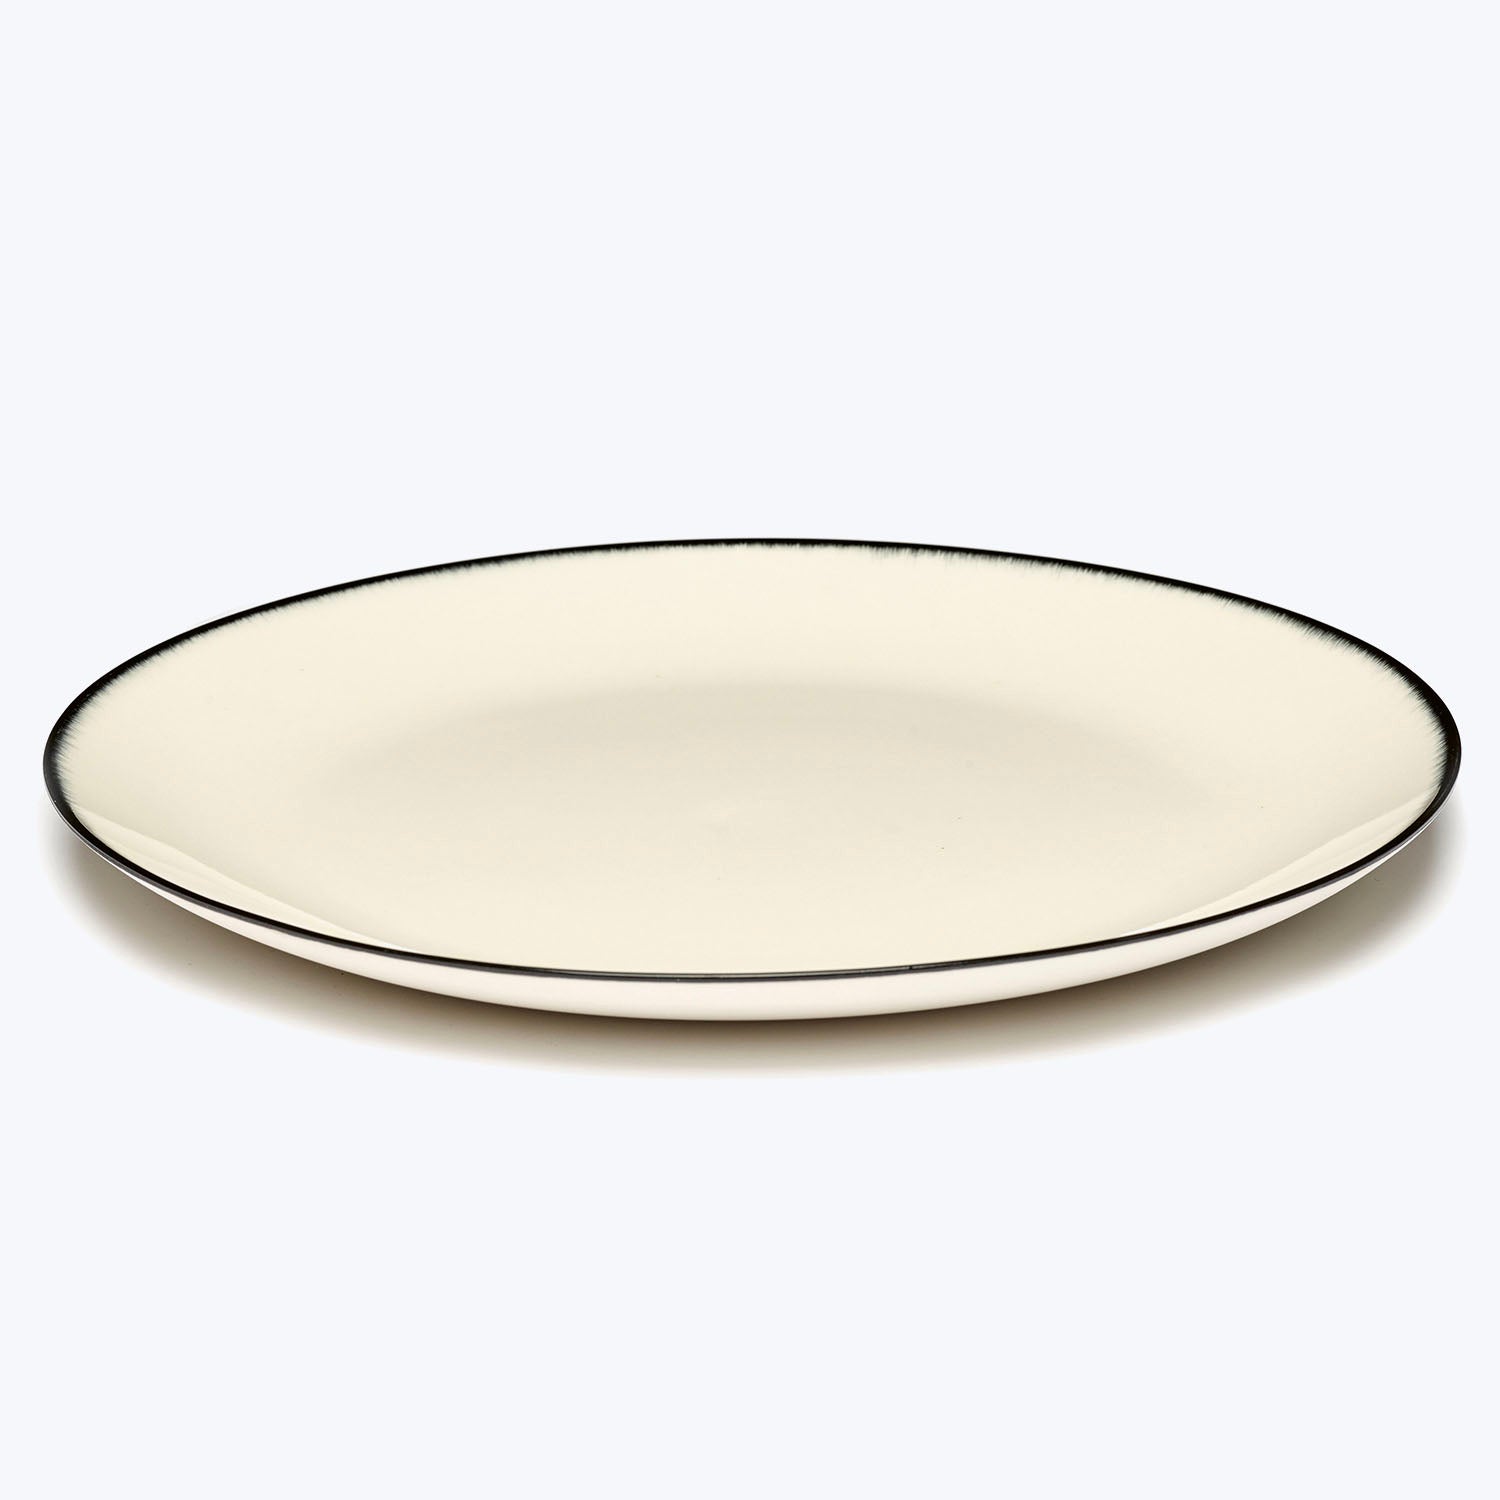 De Dinnerware Collection Variation 1 / Dinner Plate (Set of 4)